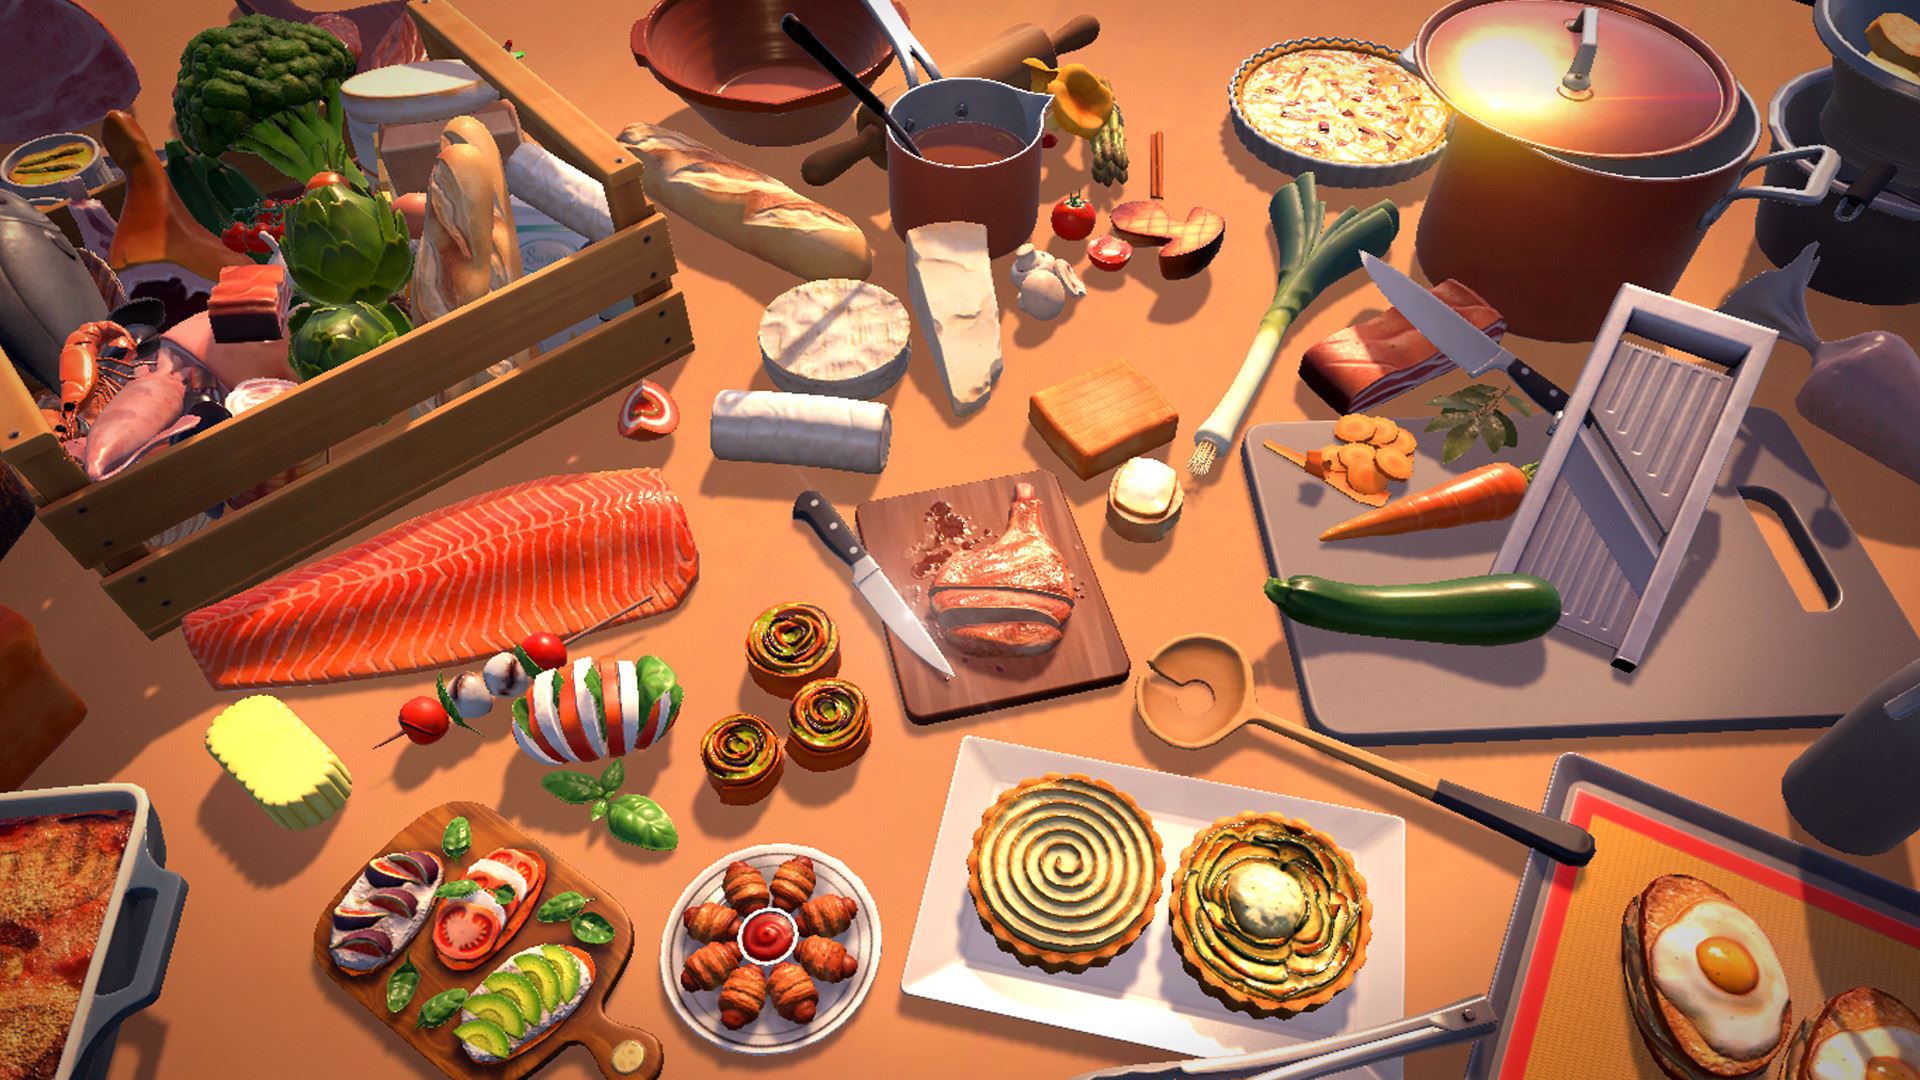 Chef life: A Restaurant Simulator ponkol prv trailer